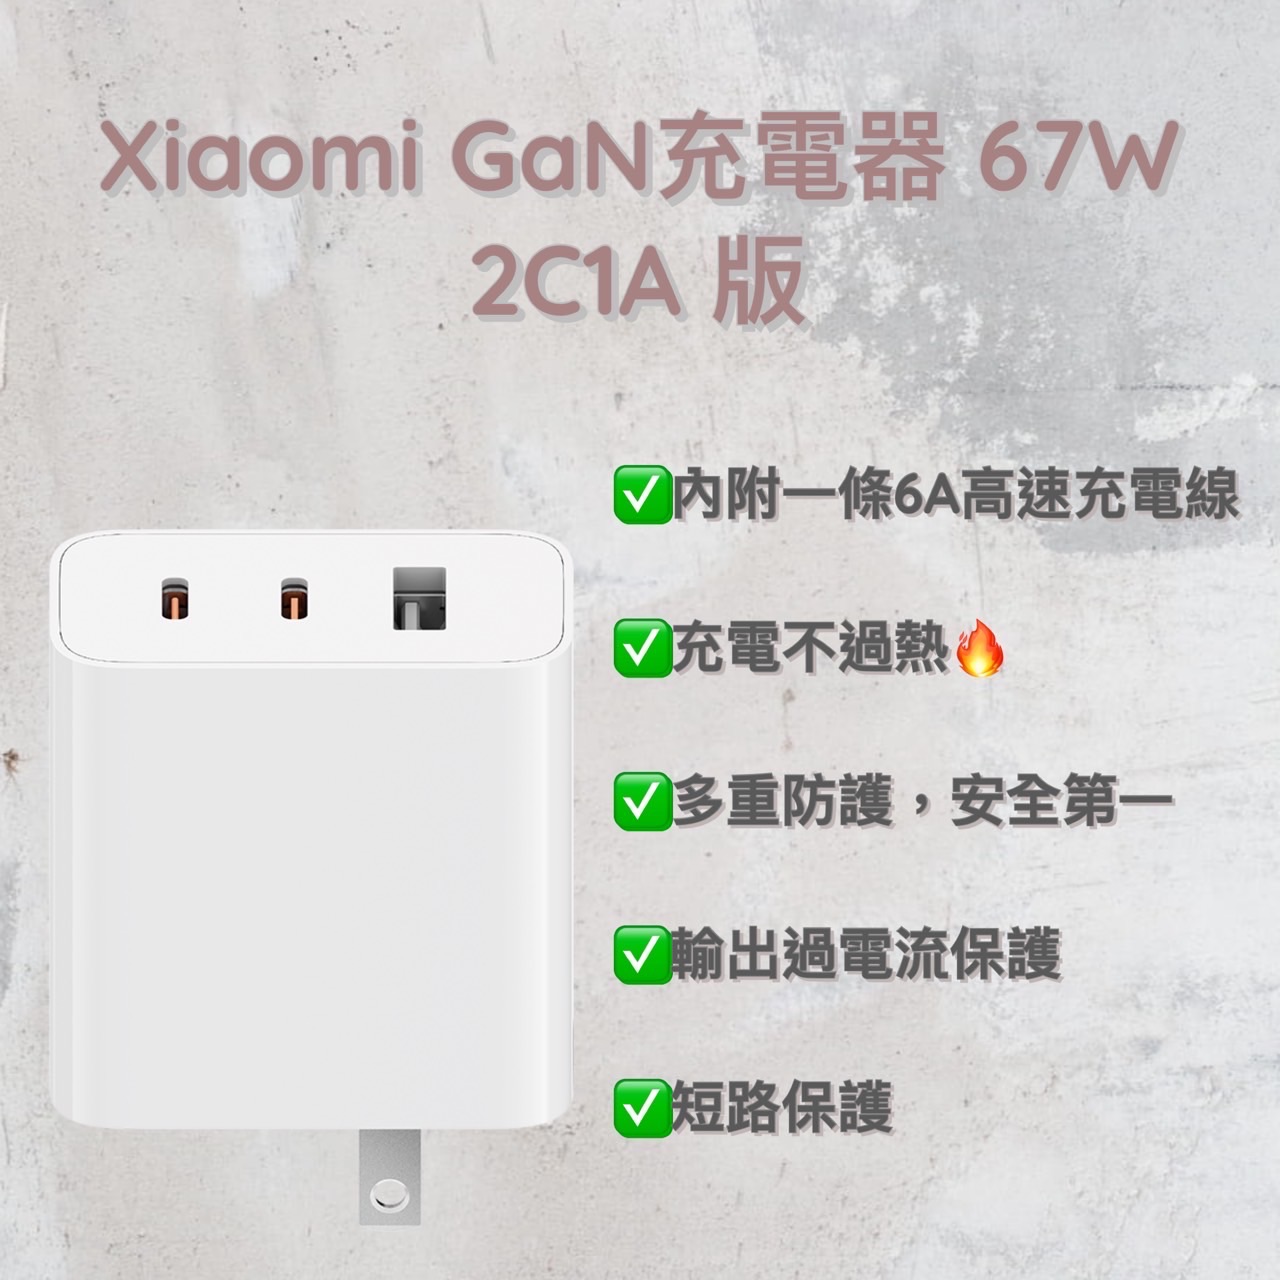 Xiaomi GaN充電器 67W 2C1A版